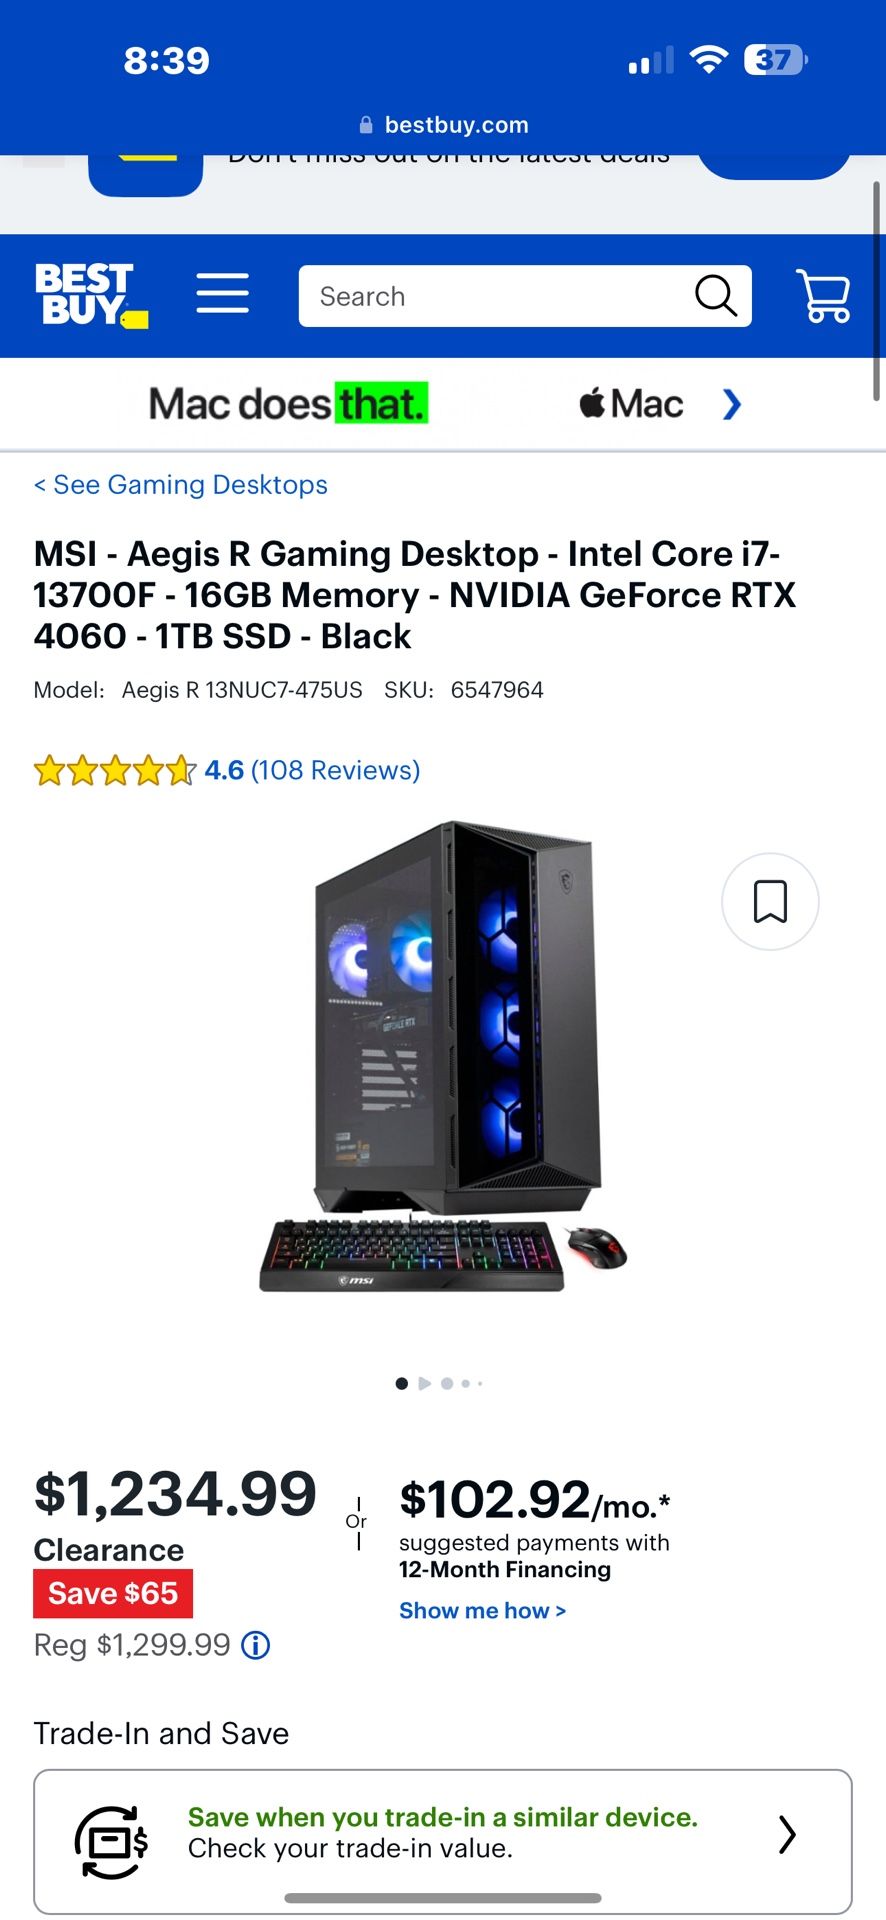 MSI GAMING PC